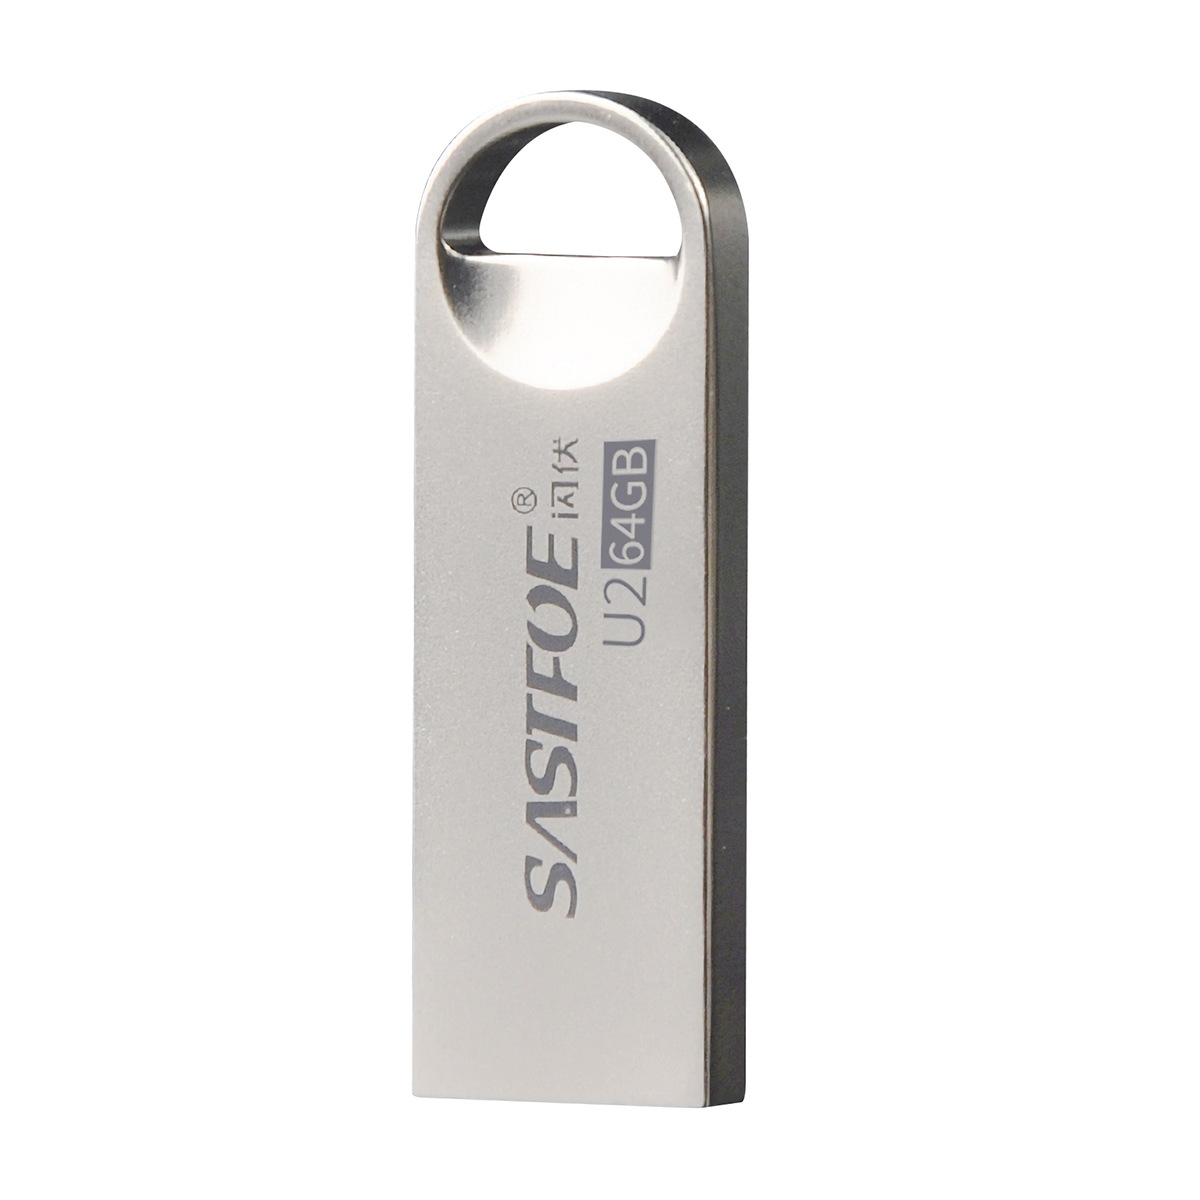 SASTFOE USB Flash Drive 32G/64G/128G USB2.0 Disk Memory Disk Pen Drive Portable USB Flash Drive Thumb Drive